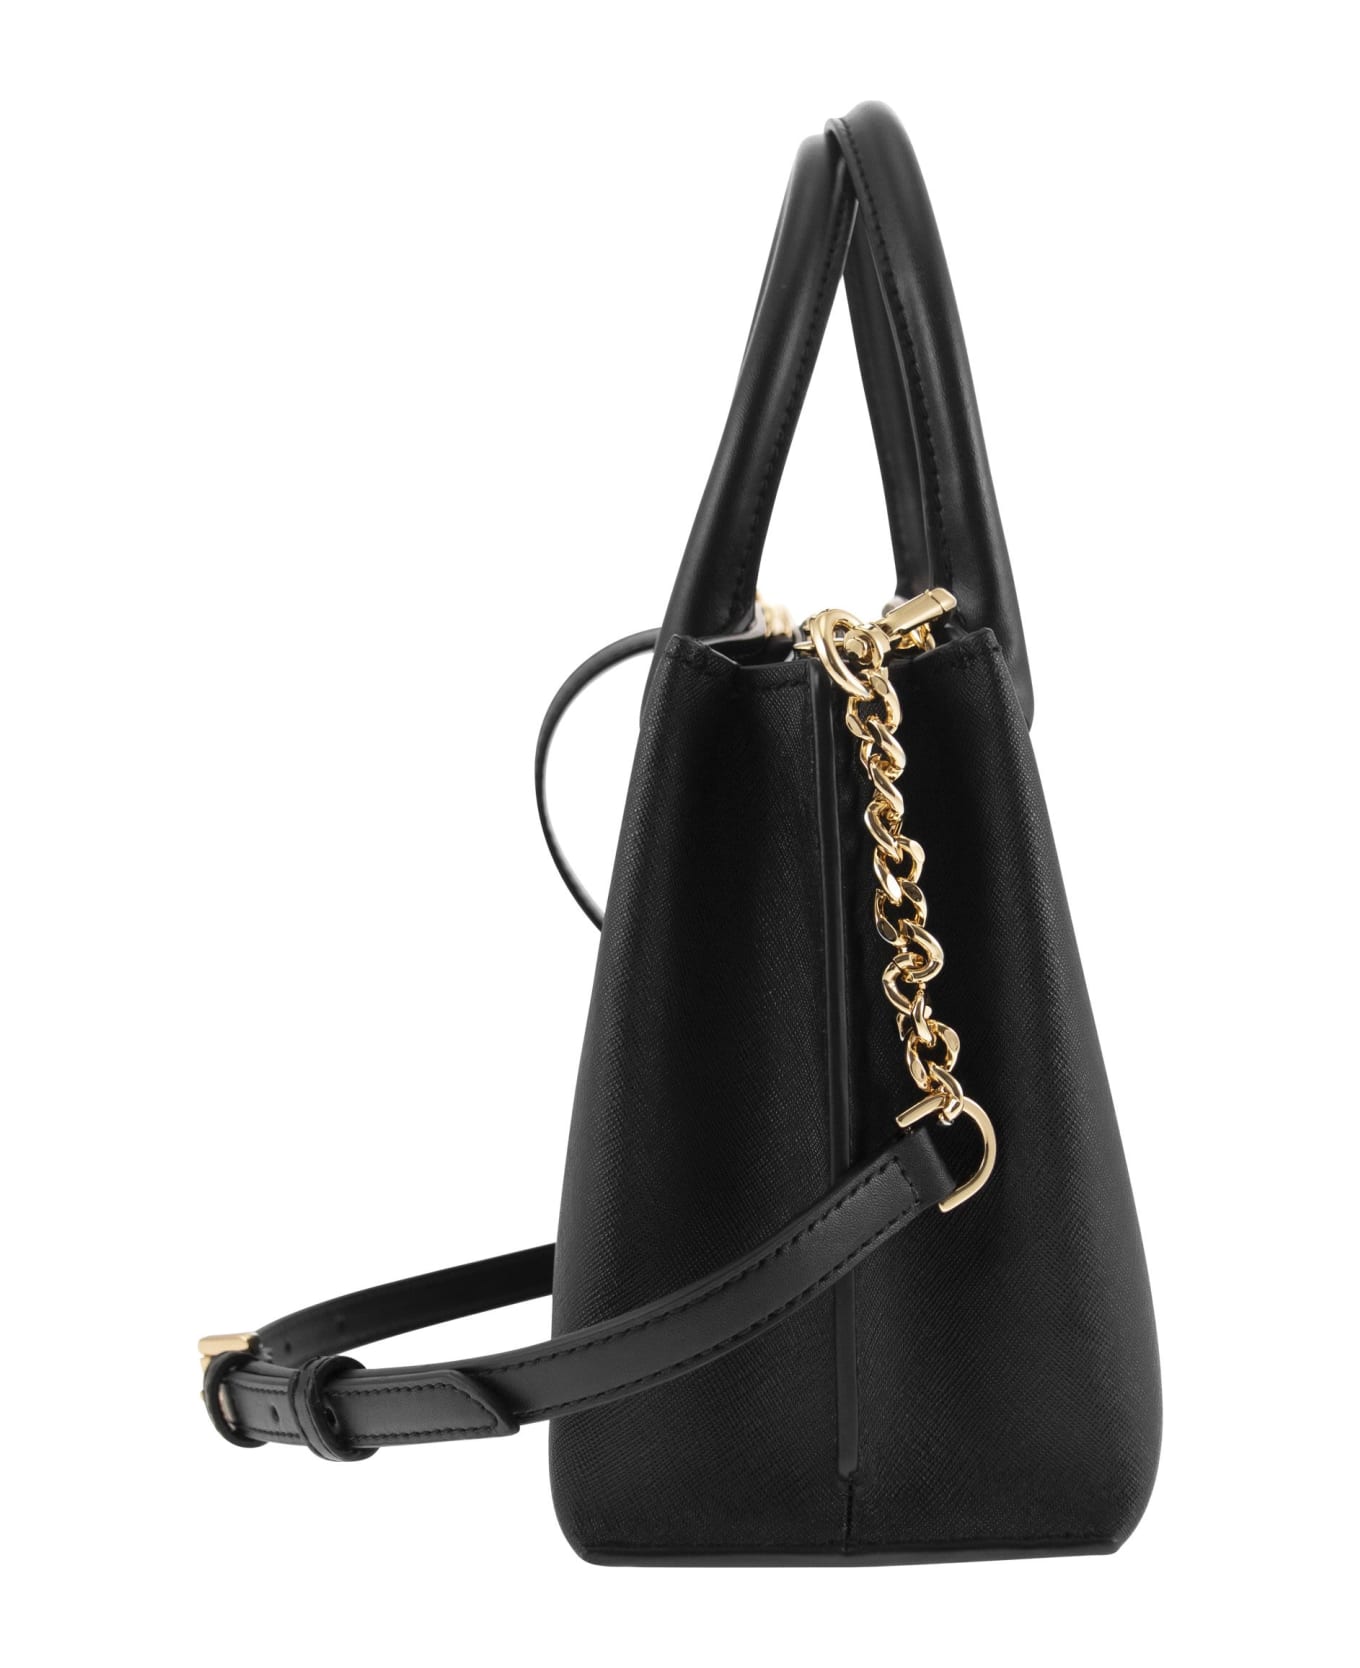 Michael Kors Ruby Leather Handbag - black